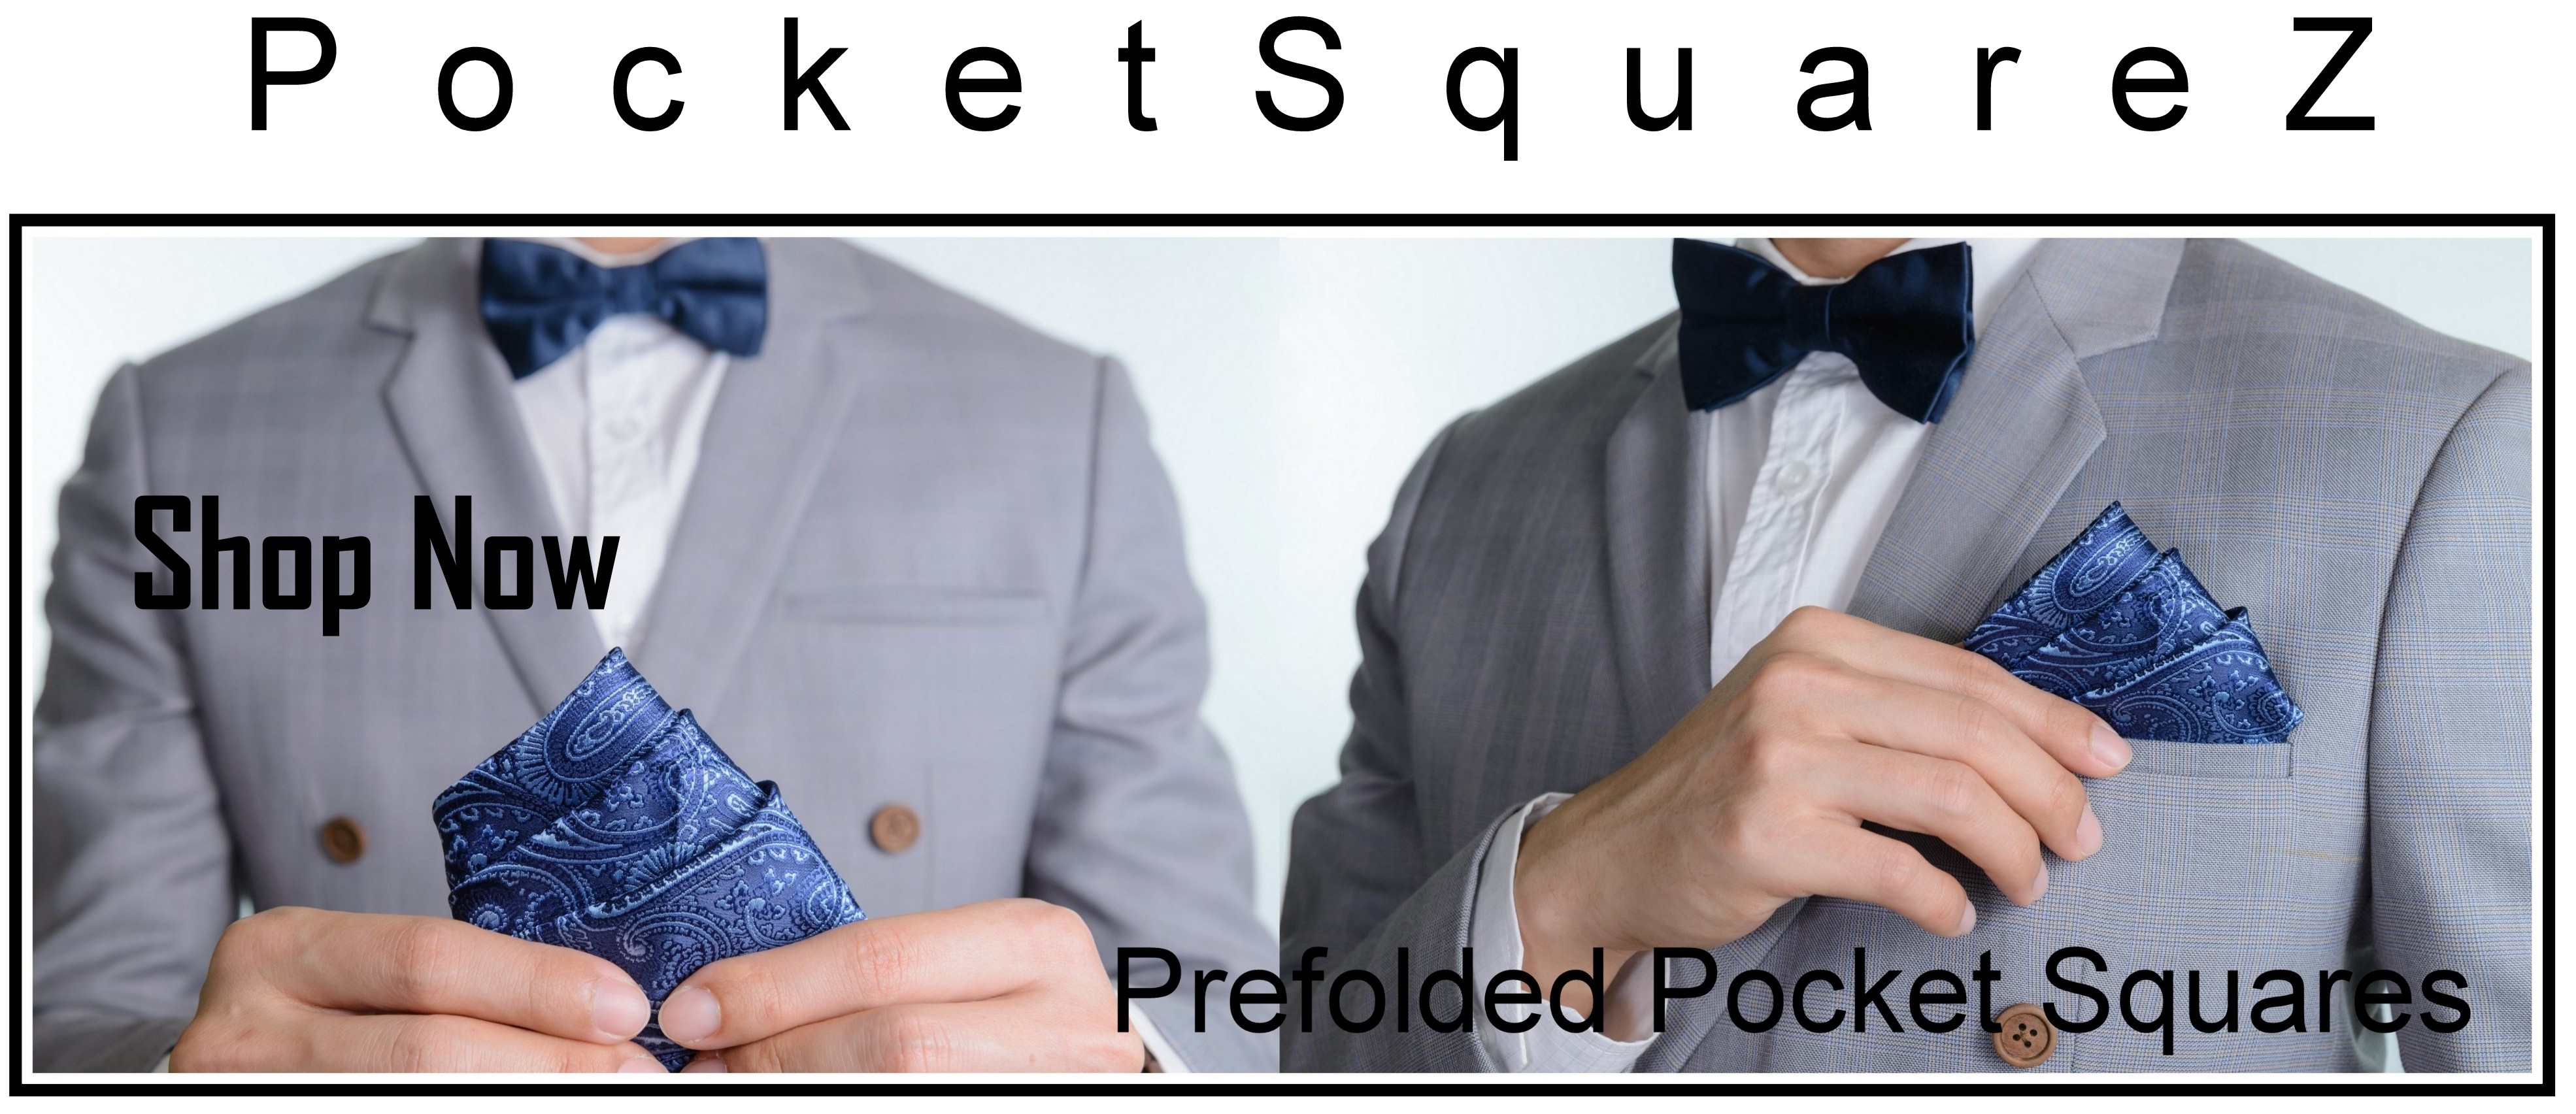 pocket-square-new-concept.jpg